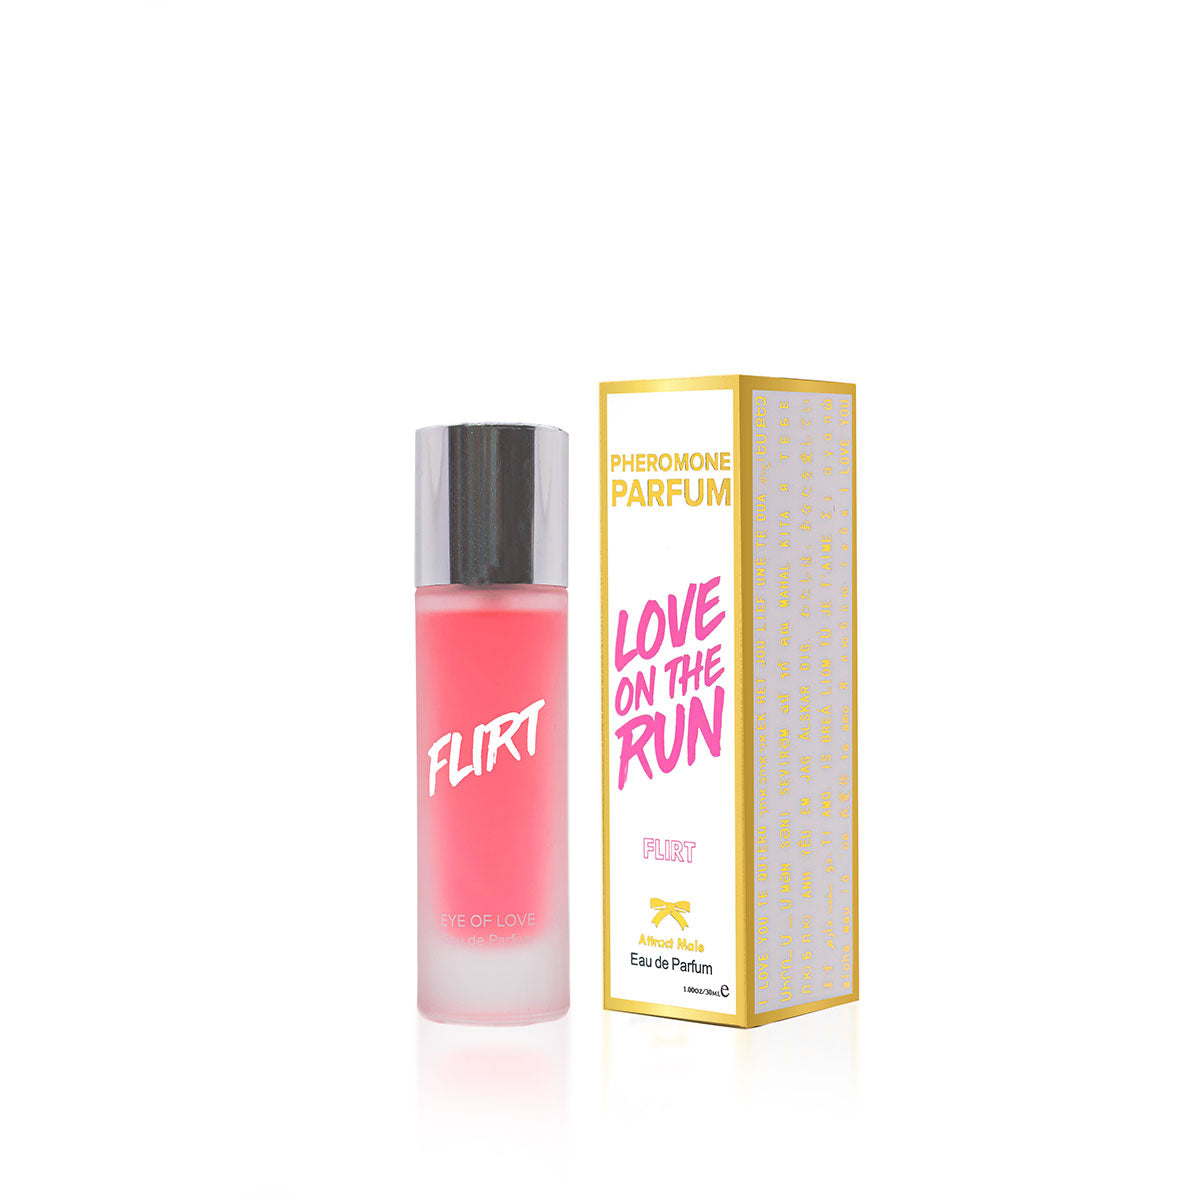 Eye of Love - Love on the Run Pheromone Parfum 30ml - Flirt (F to M)